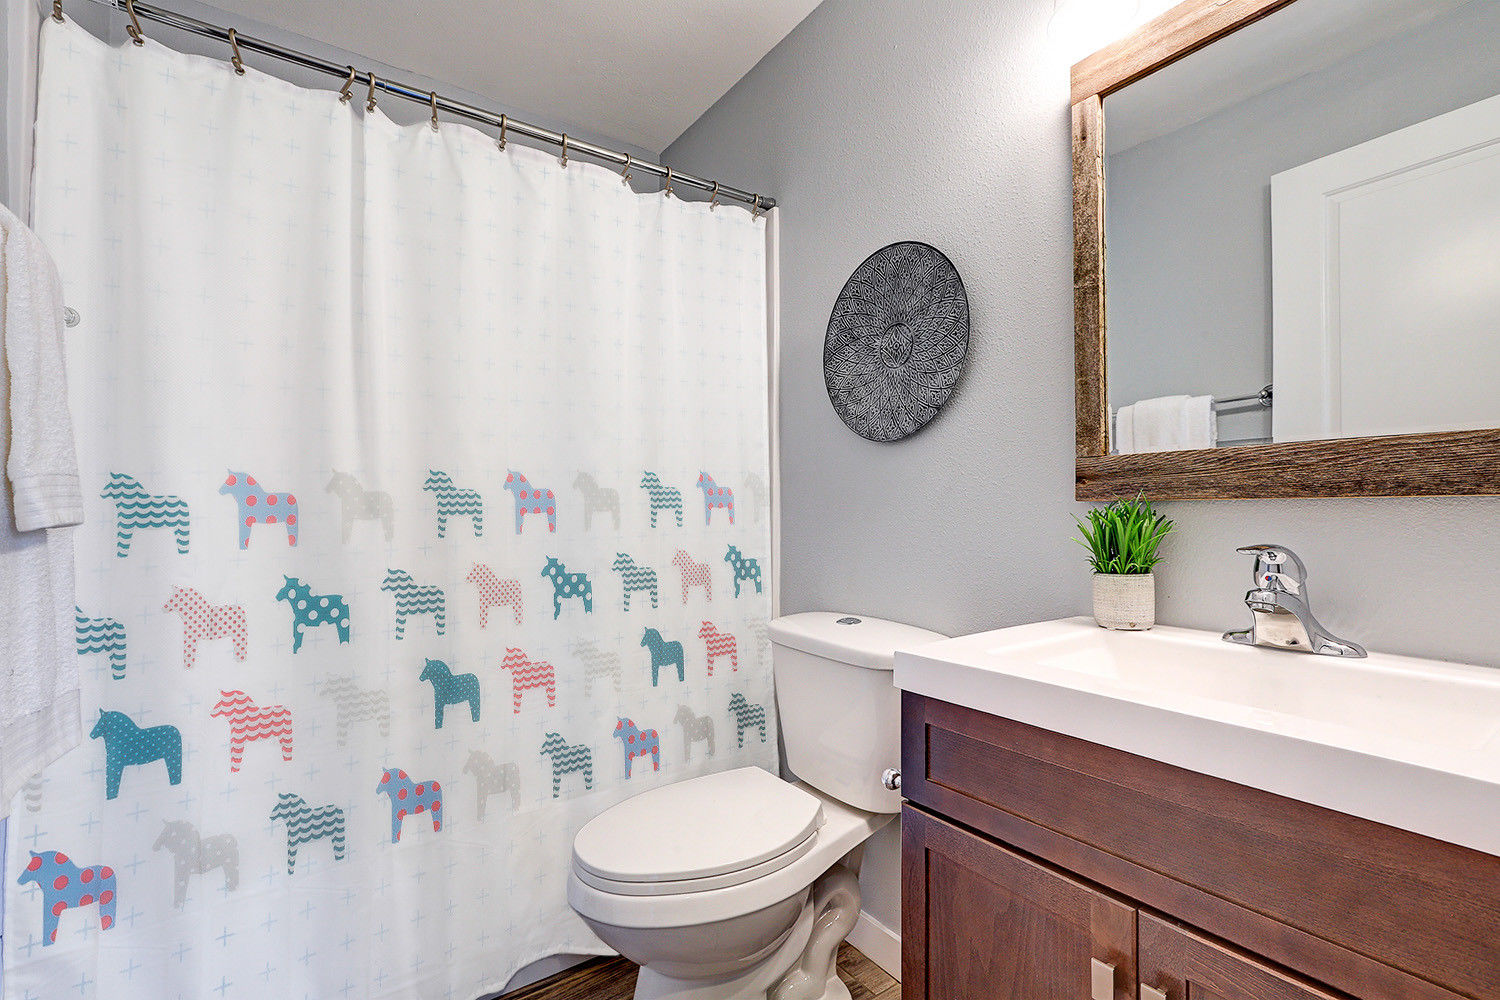 Shower Curtain & Mat Bathroom Set - Non Slip Bath Rug & Curtain & Hook Sets